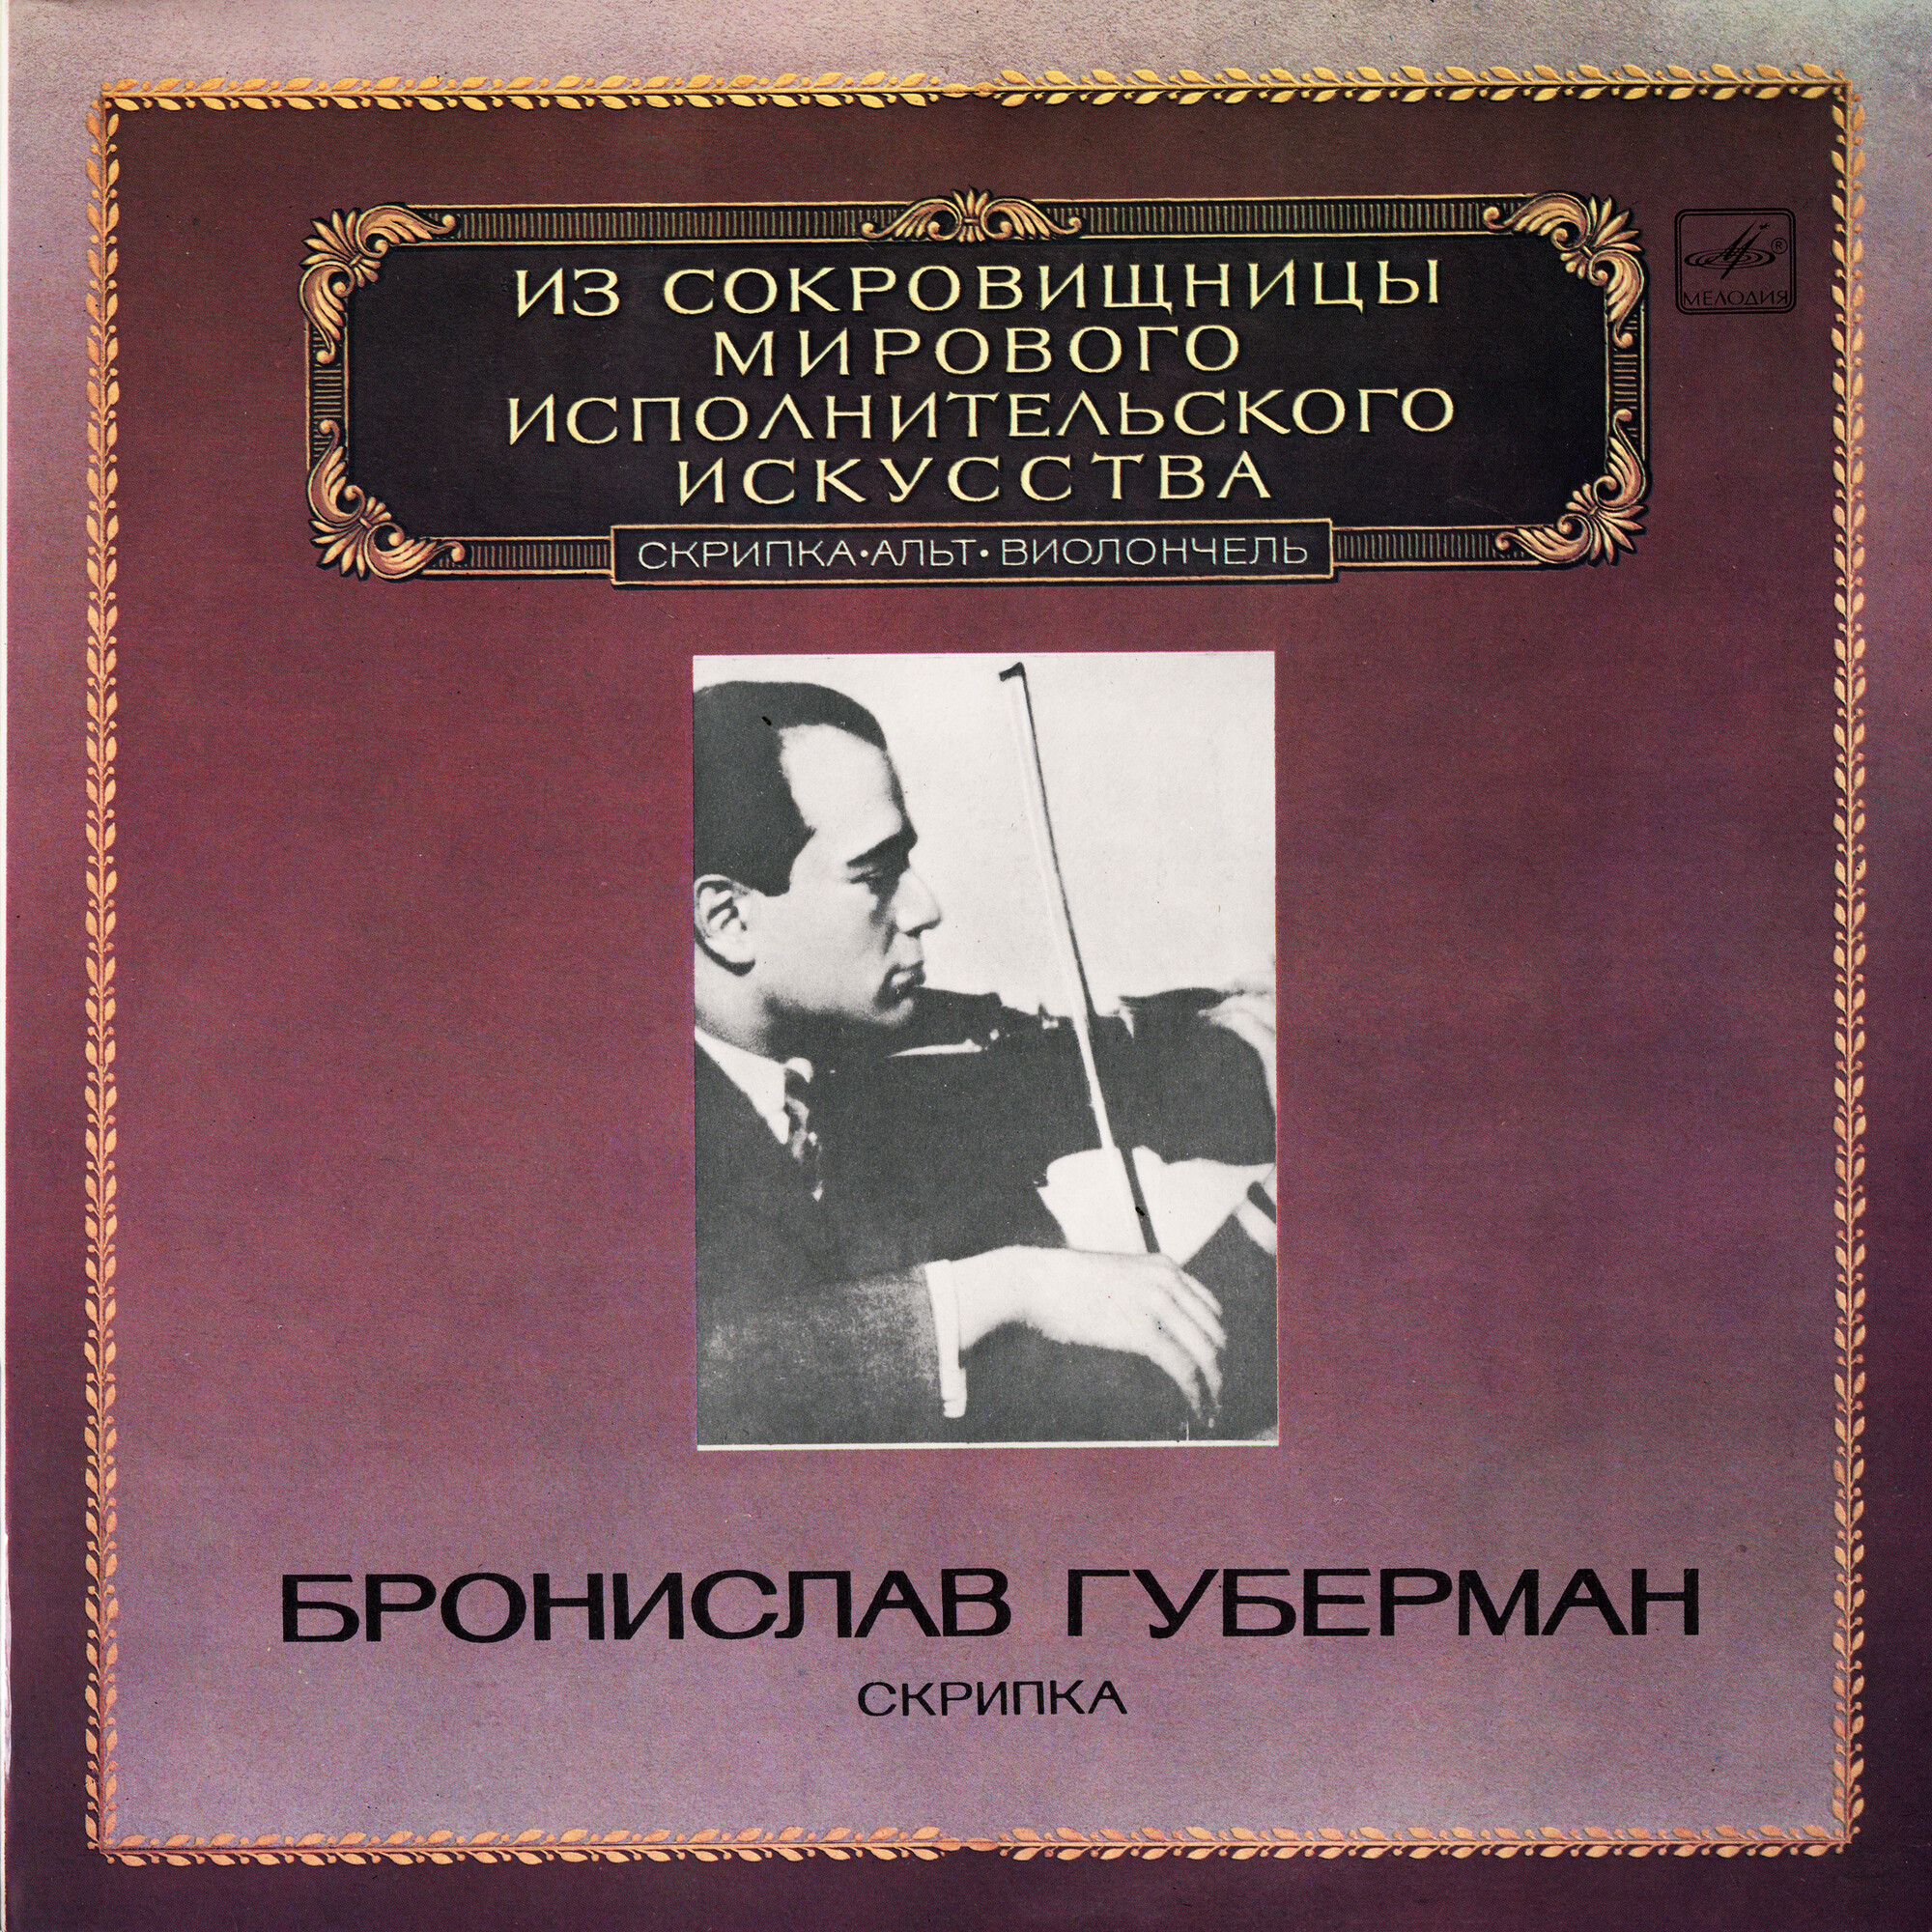 Бронислав Губерман (скрипка)